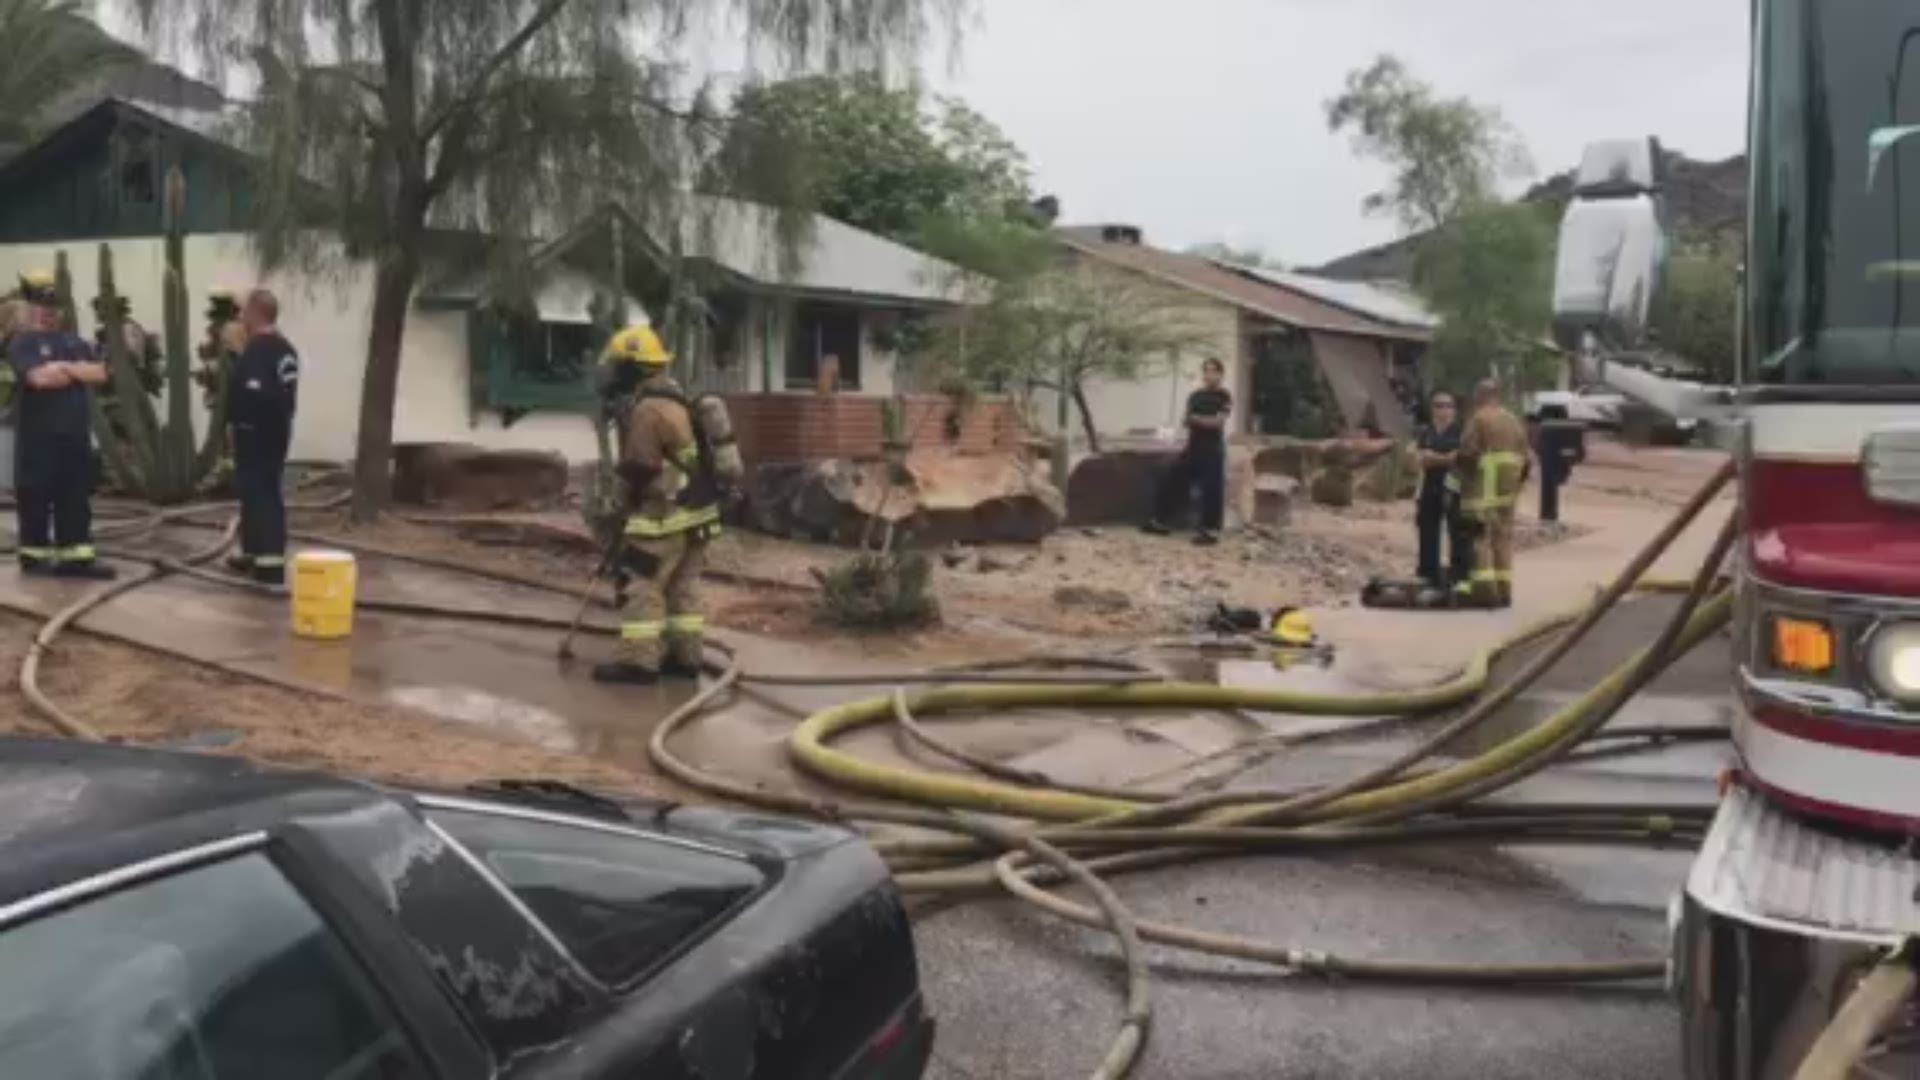 Video via Phoenix Fire Department